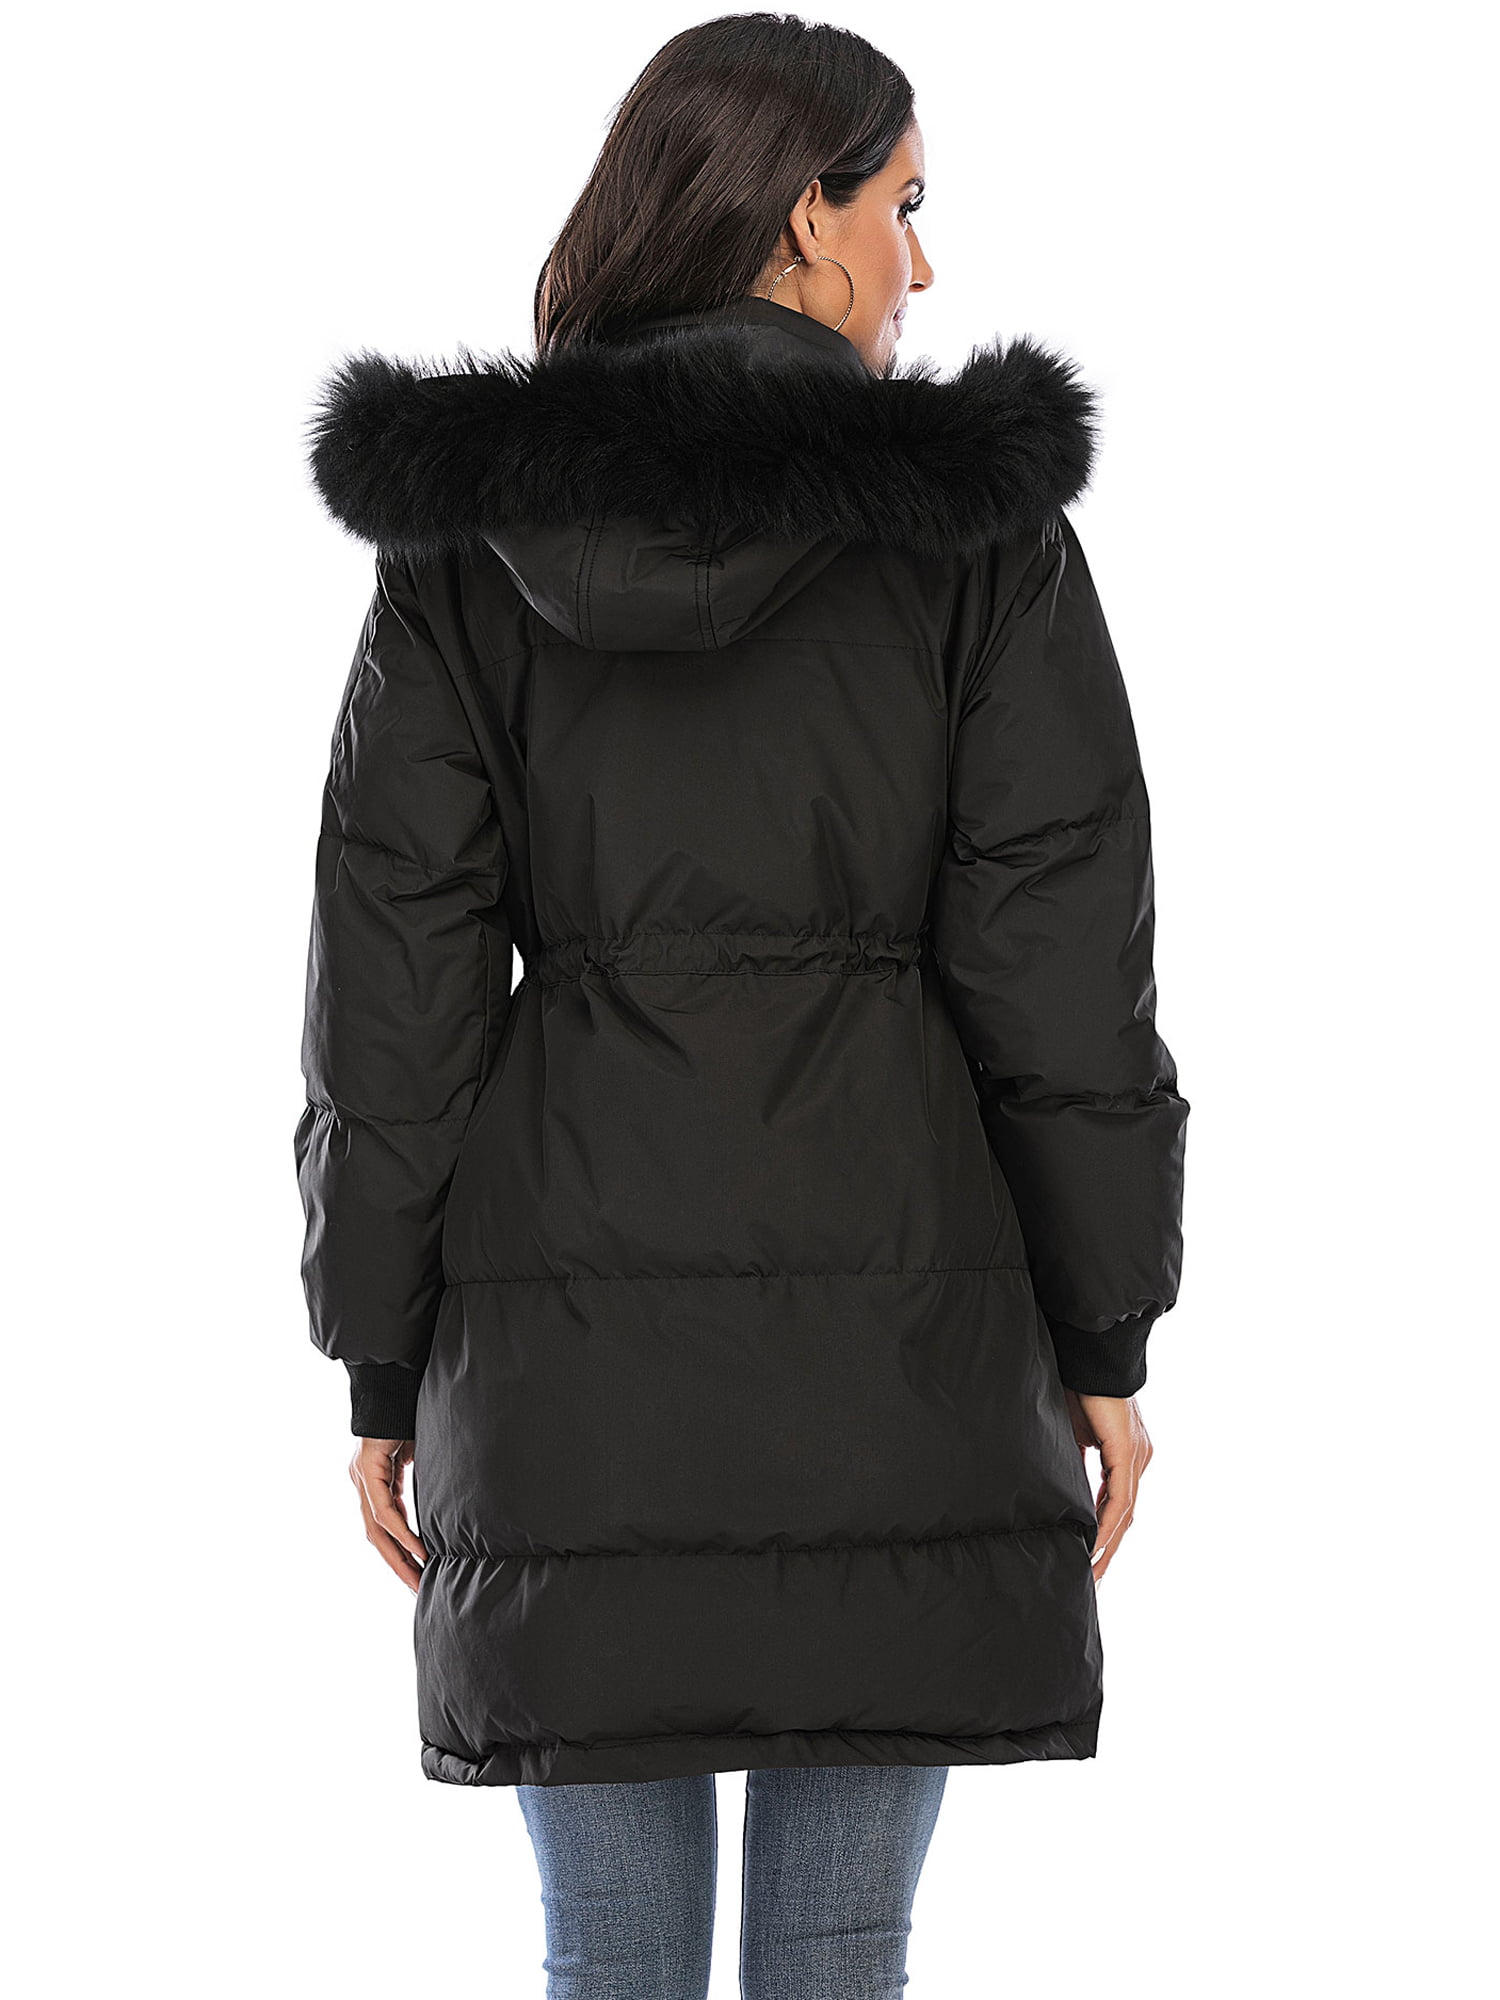 LELINTA Women Winter Plus Size Long Hoodie Warm Hooded Jacket Zip Parka Overcoats Raincoat Active Outdoor Trench Camouflage - Walmart.com